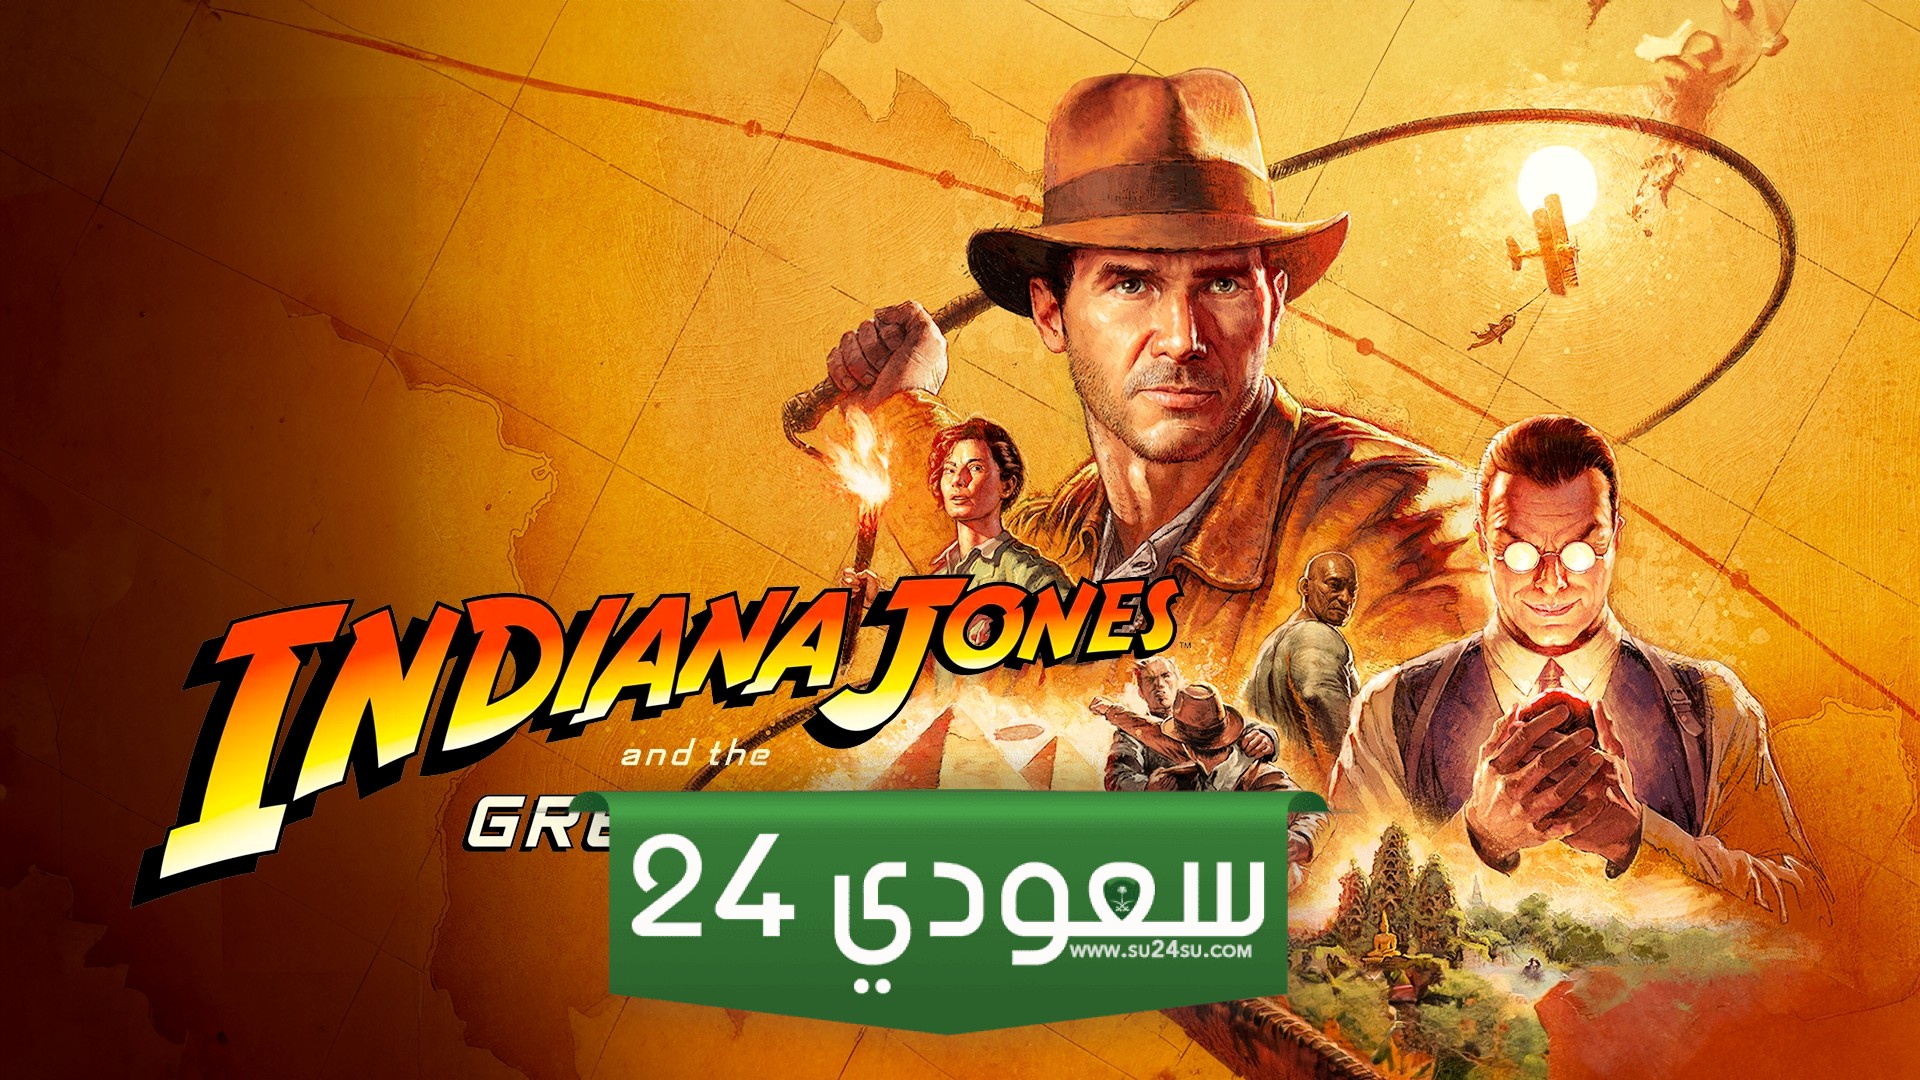 معاينات Indiana Jones and the Great Circle تنطلق في 10 يونيو